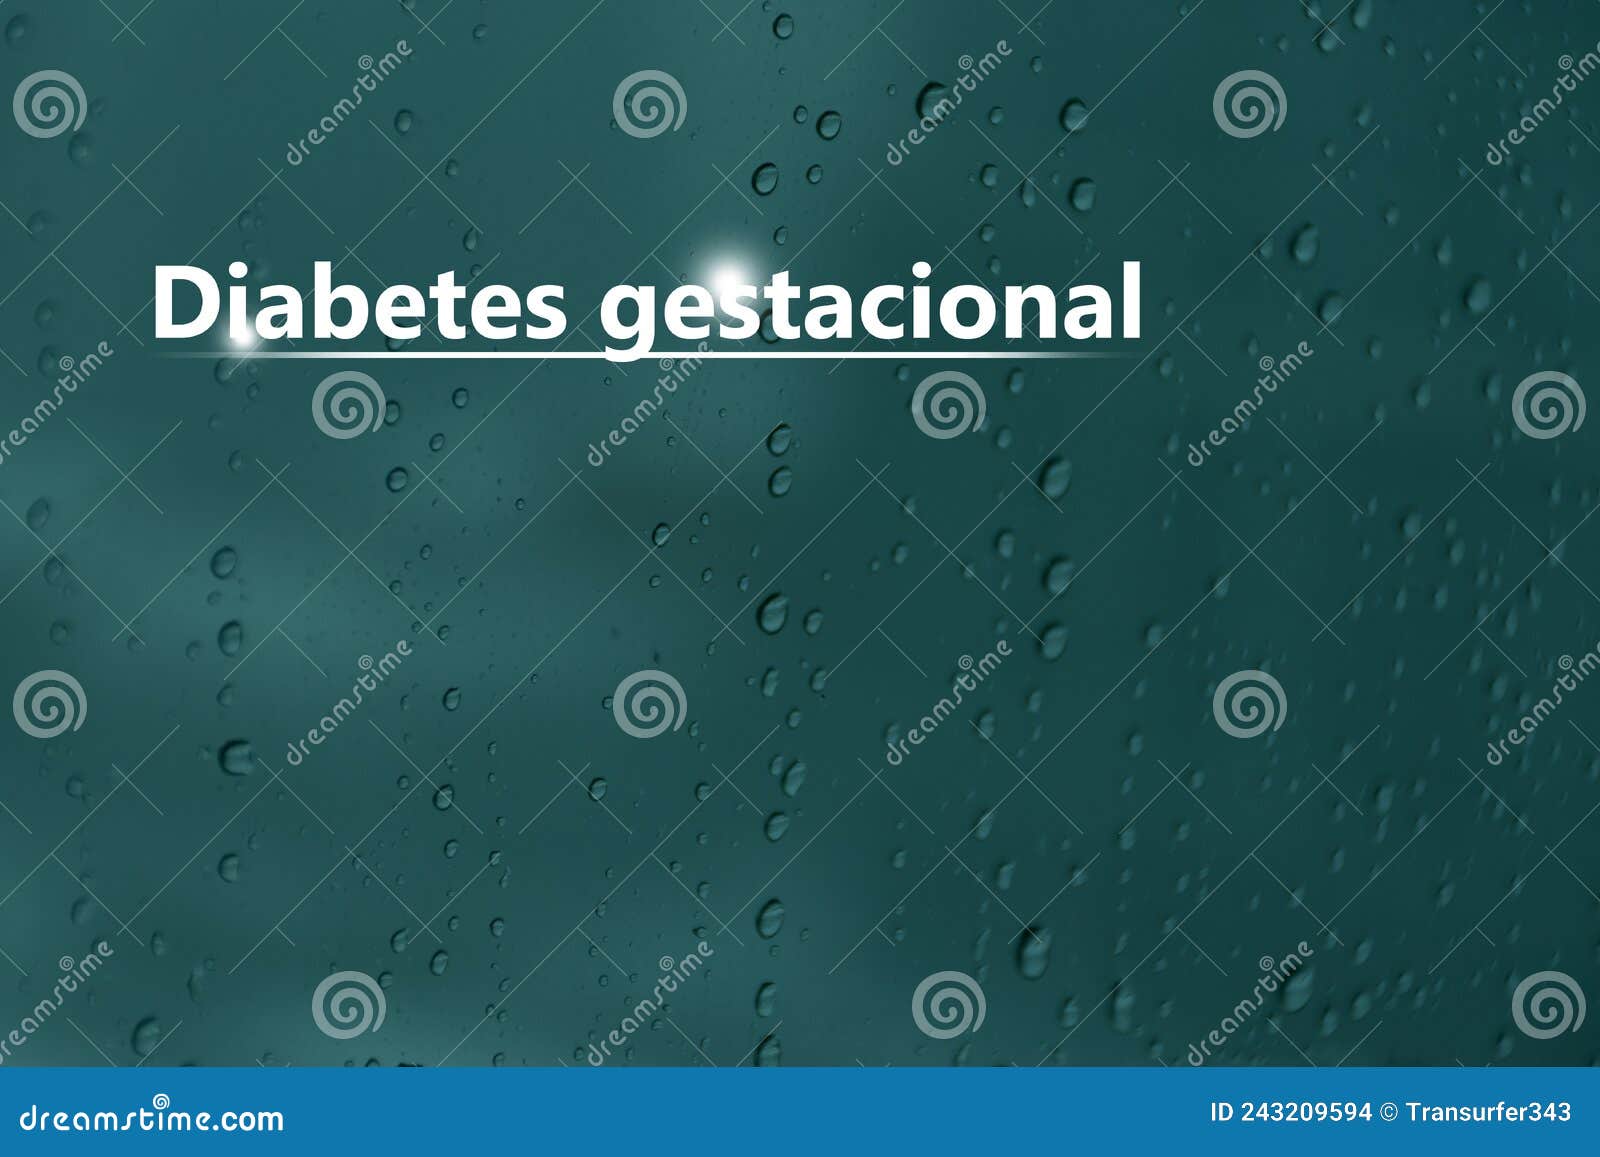 diabetes gestacional - diagnÃÂ³stico y tratamiento, lista de comprobaciÃÂ³n mÃÂ©dica. fondo texturizado y espacio de copia vacÃÂ­o